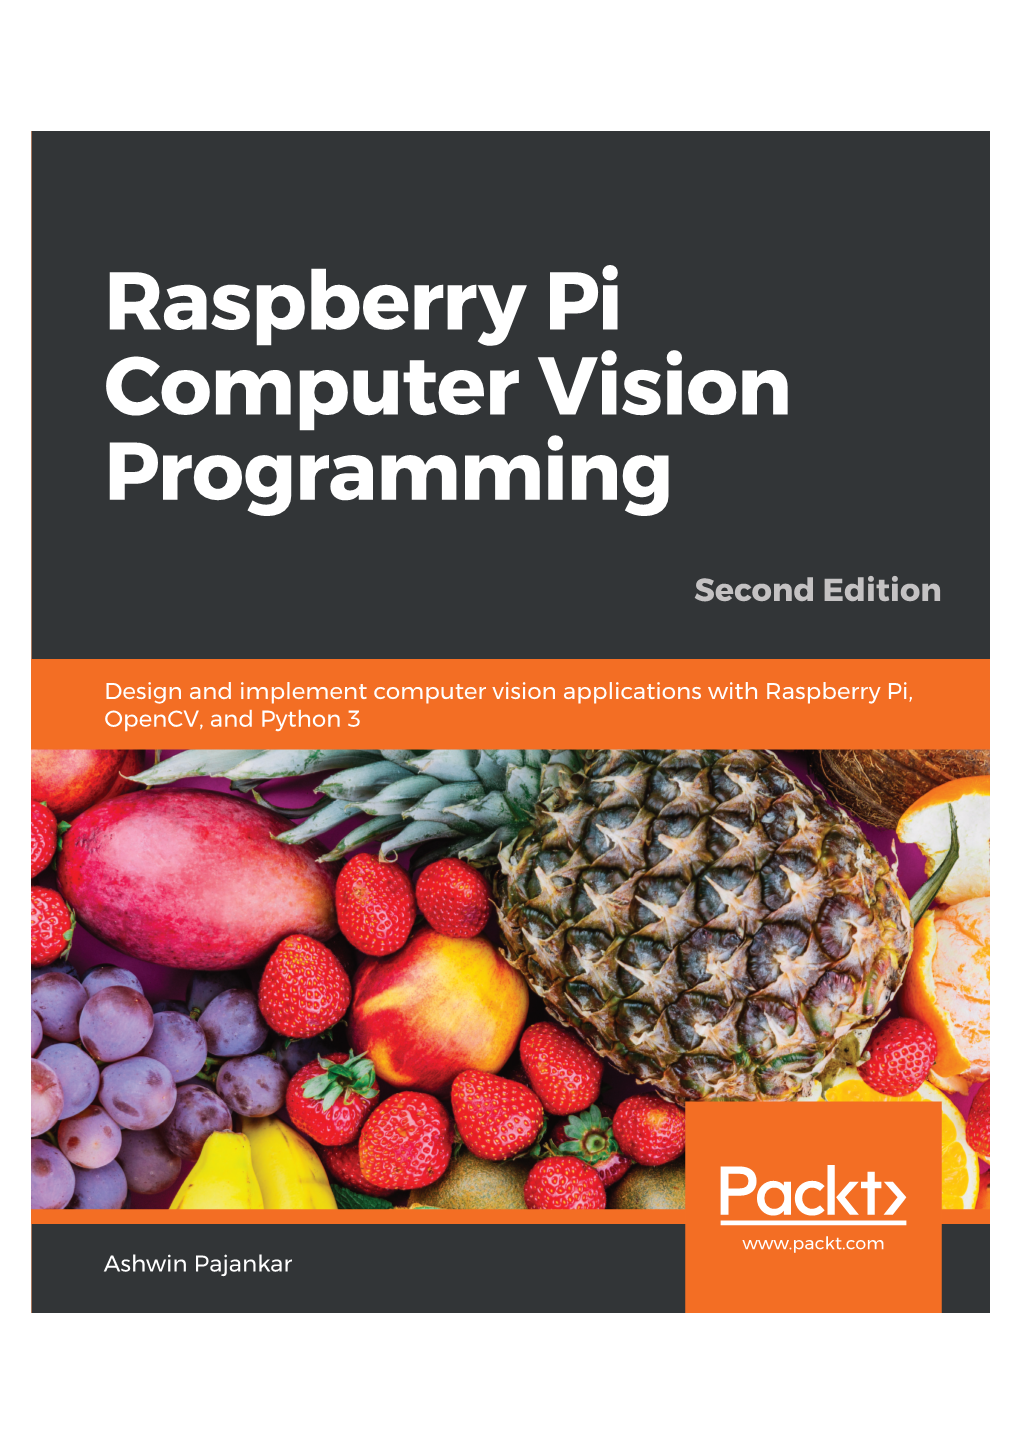 Raspberry Pi Computer Vision Programming – Second Edition Programming – Second Edition